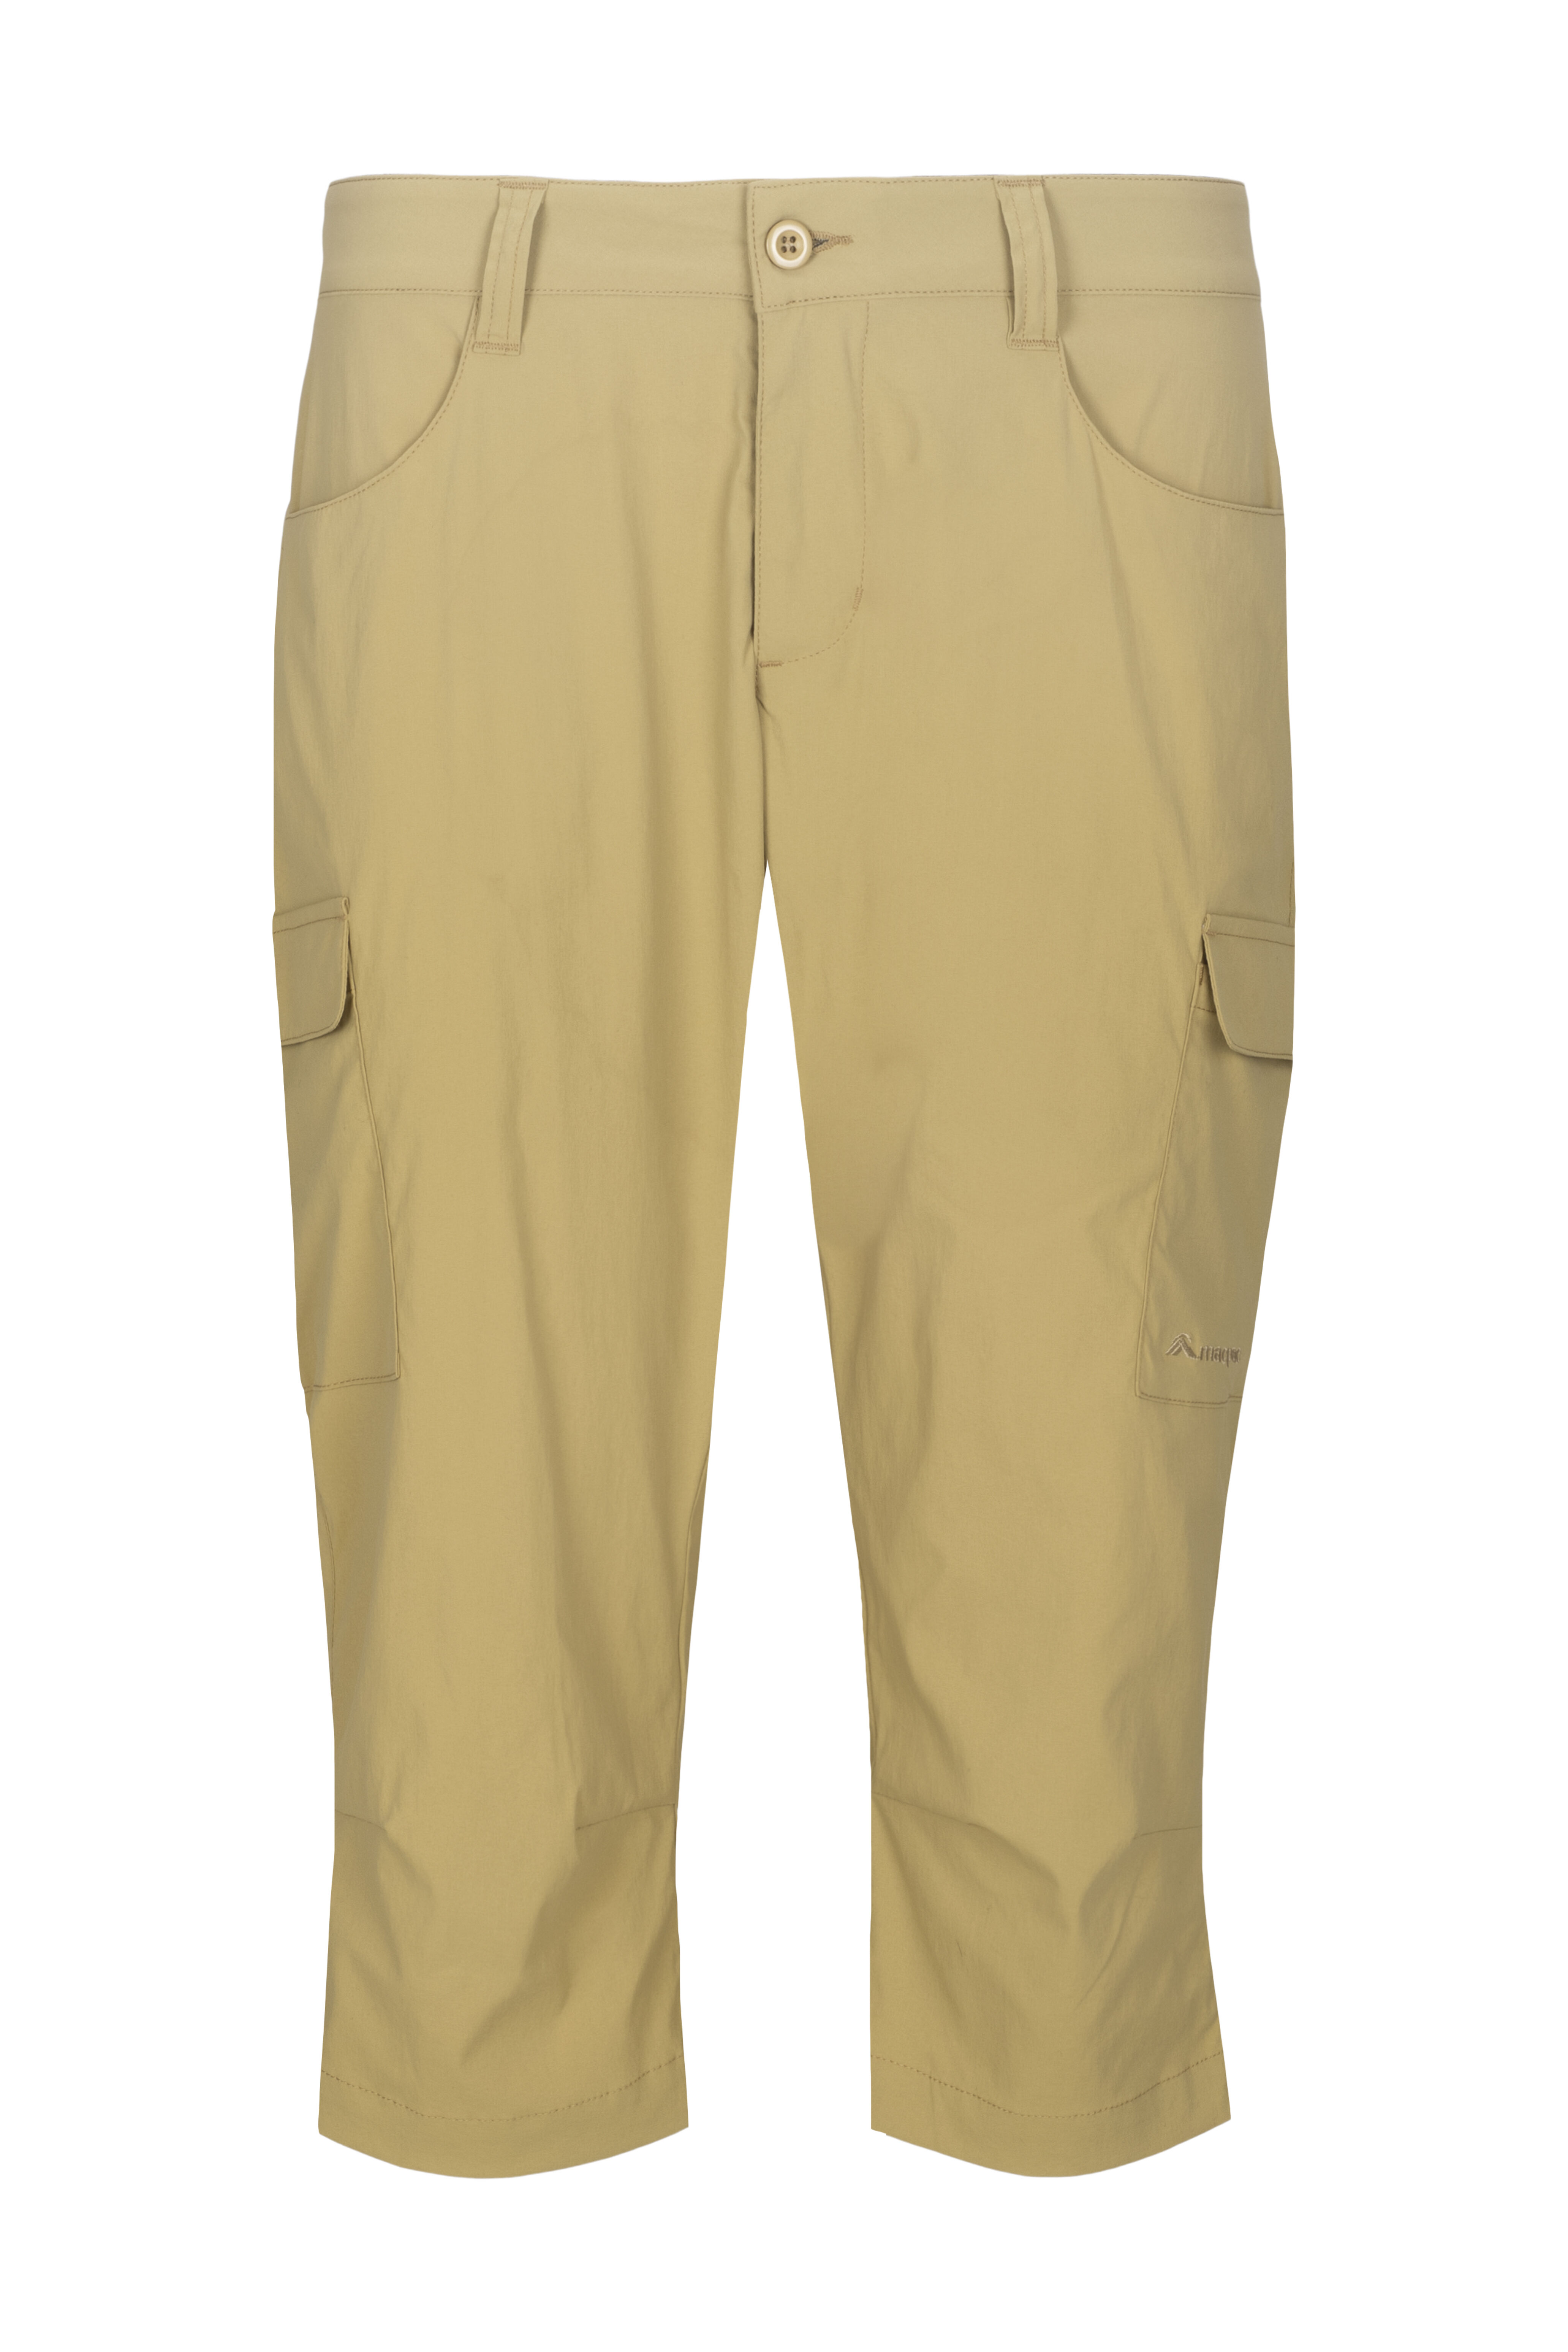 Niuer Women Summer Cargo Pants Hight Waist Beach Loose Linen Capris Pants  Holiday Drawstring Cropped Pants Loungewear Size S-3XL Brown S - Walmart.com